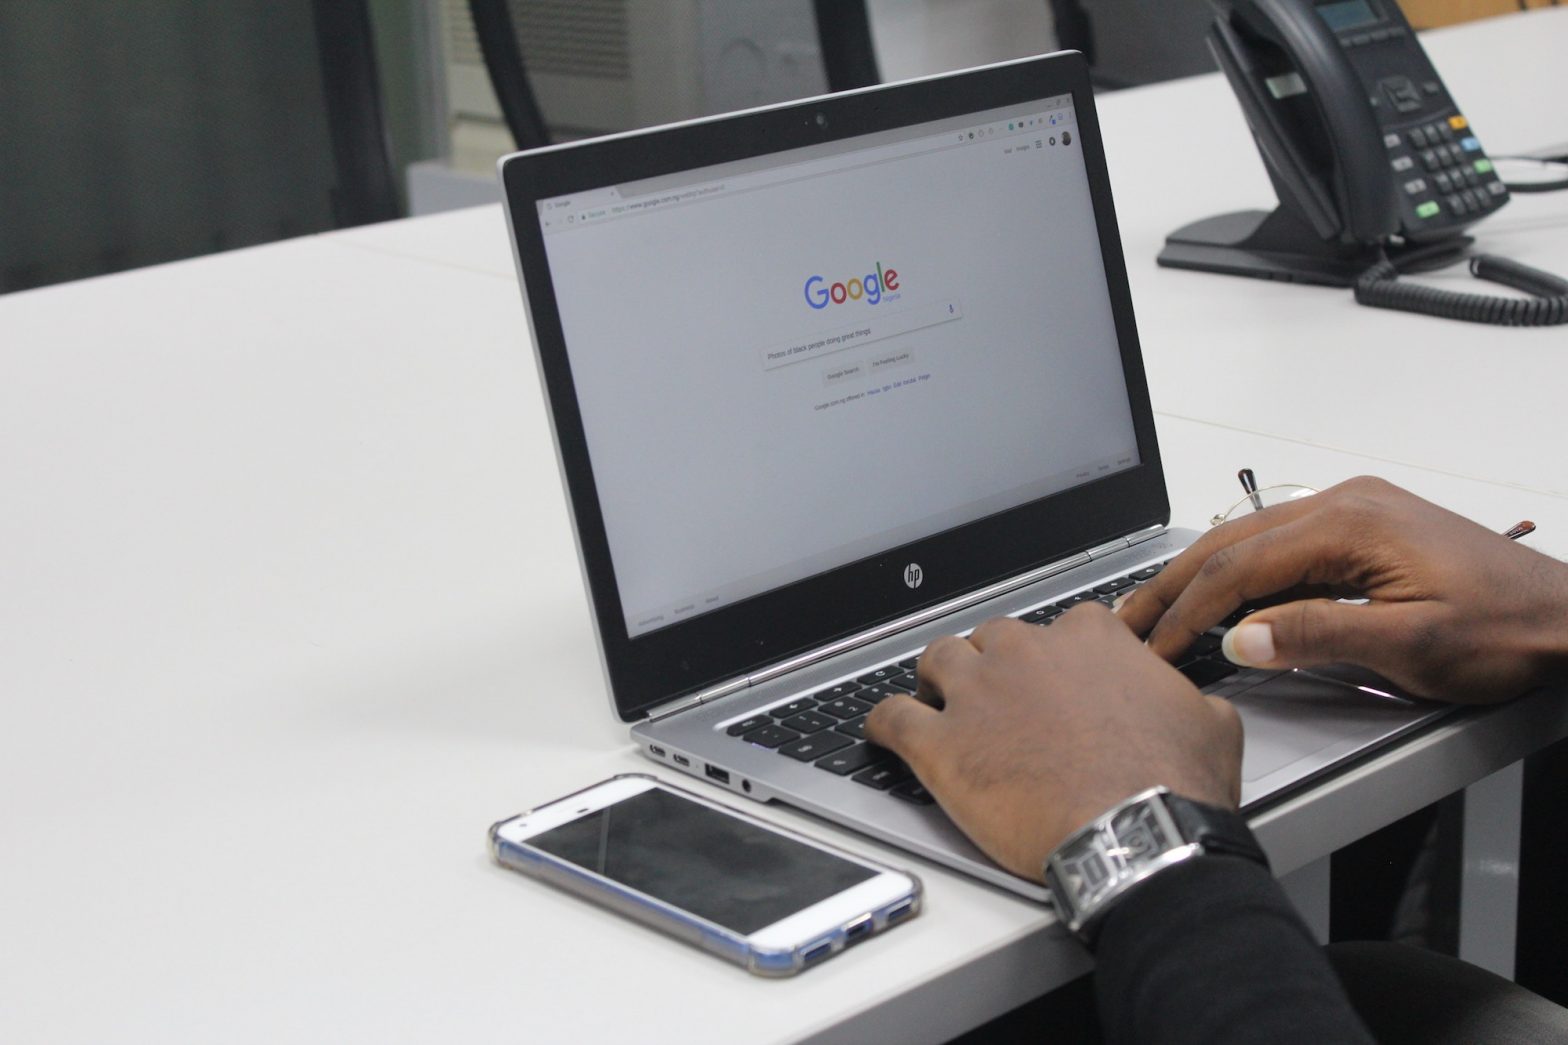 Google search on HP laptop